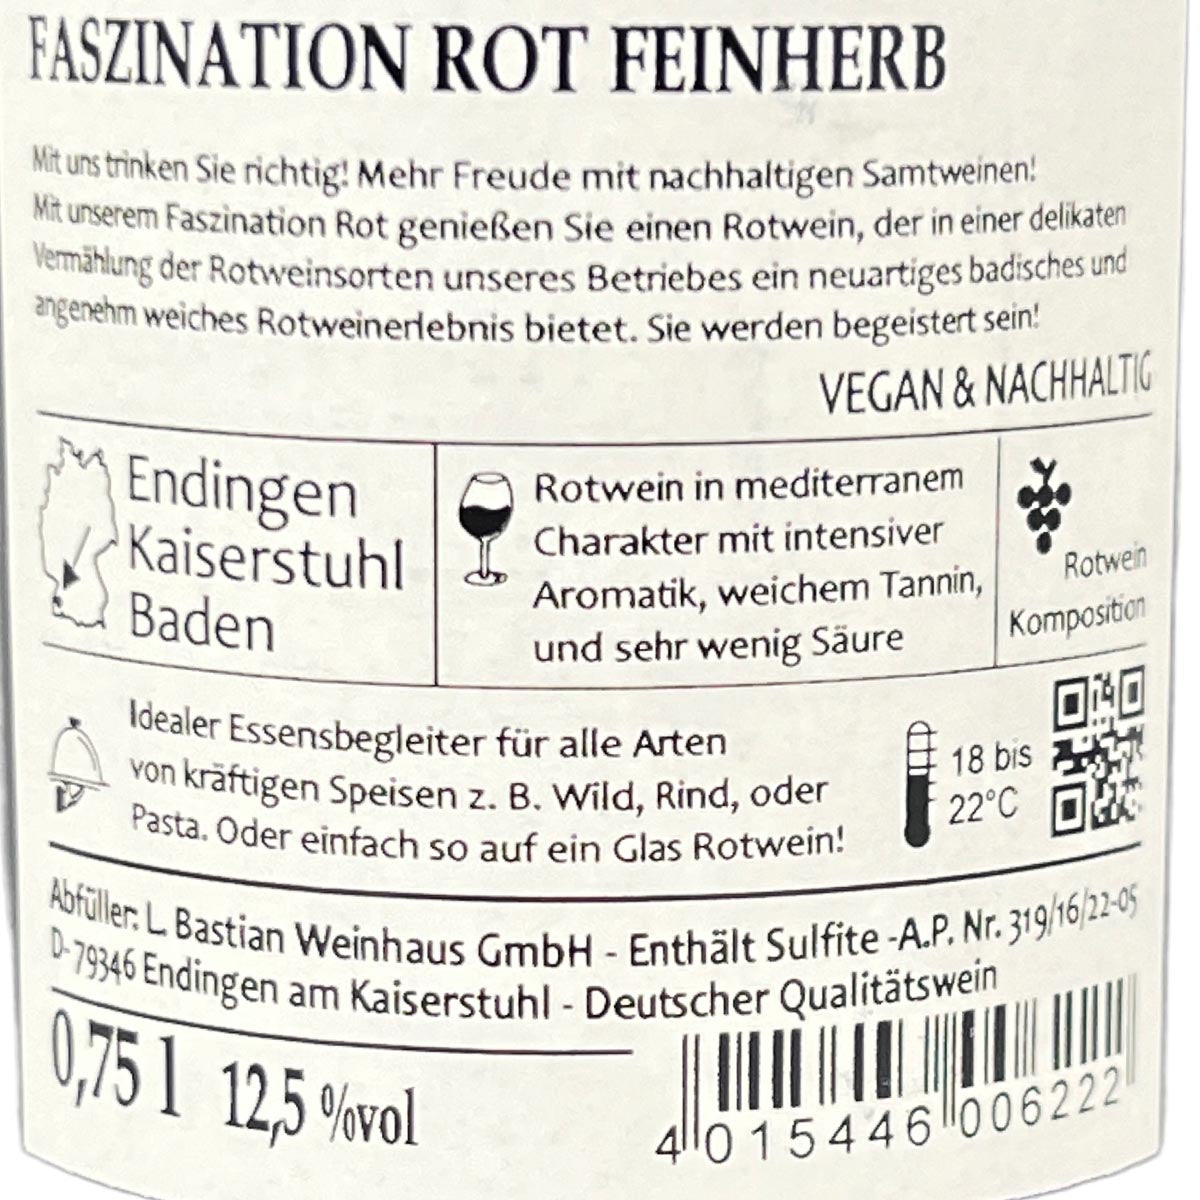 Weingut L. Bastian Edition Schwarzwaldmarie - Faszination Rot feinherb Cuvée 0,75 Liter 13%